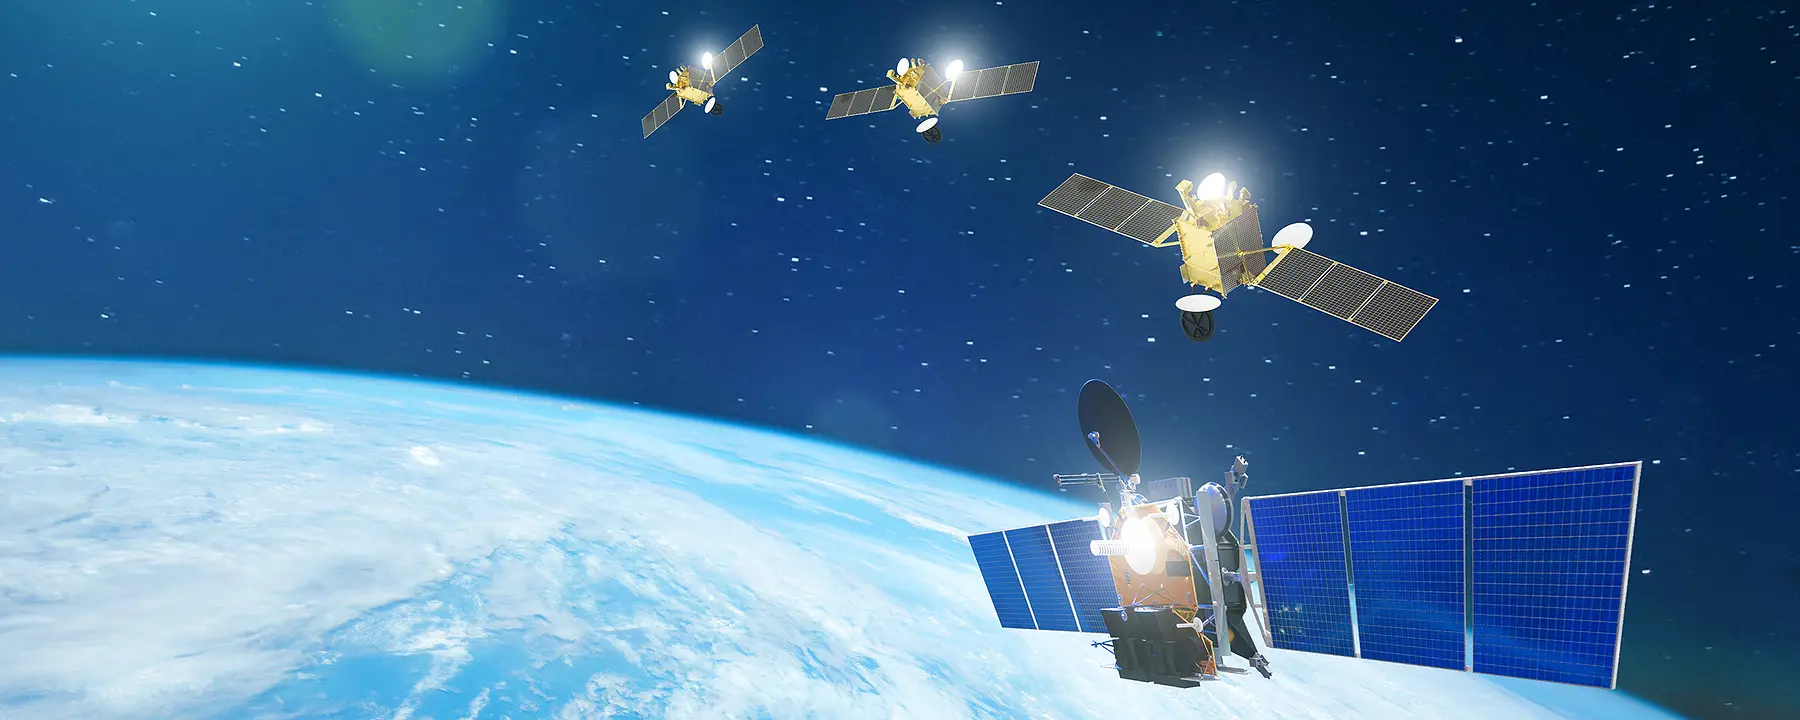 An illustration of GPS satellites in orbit around the Earth.